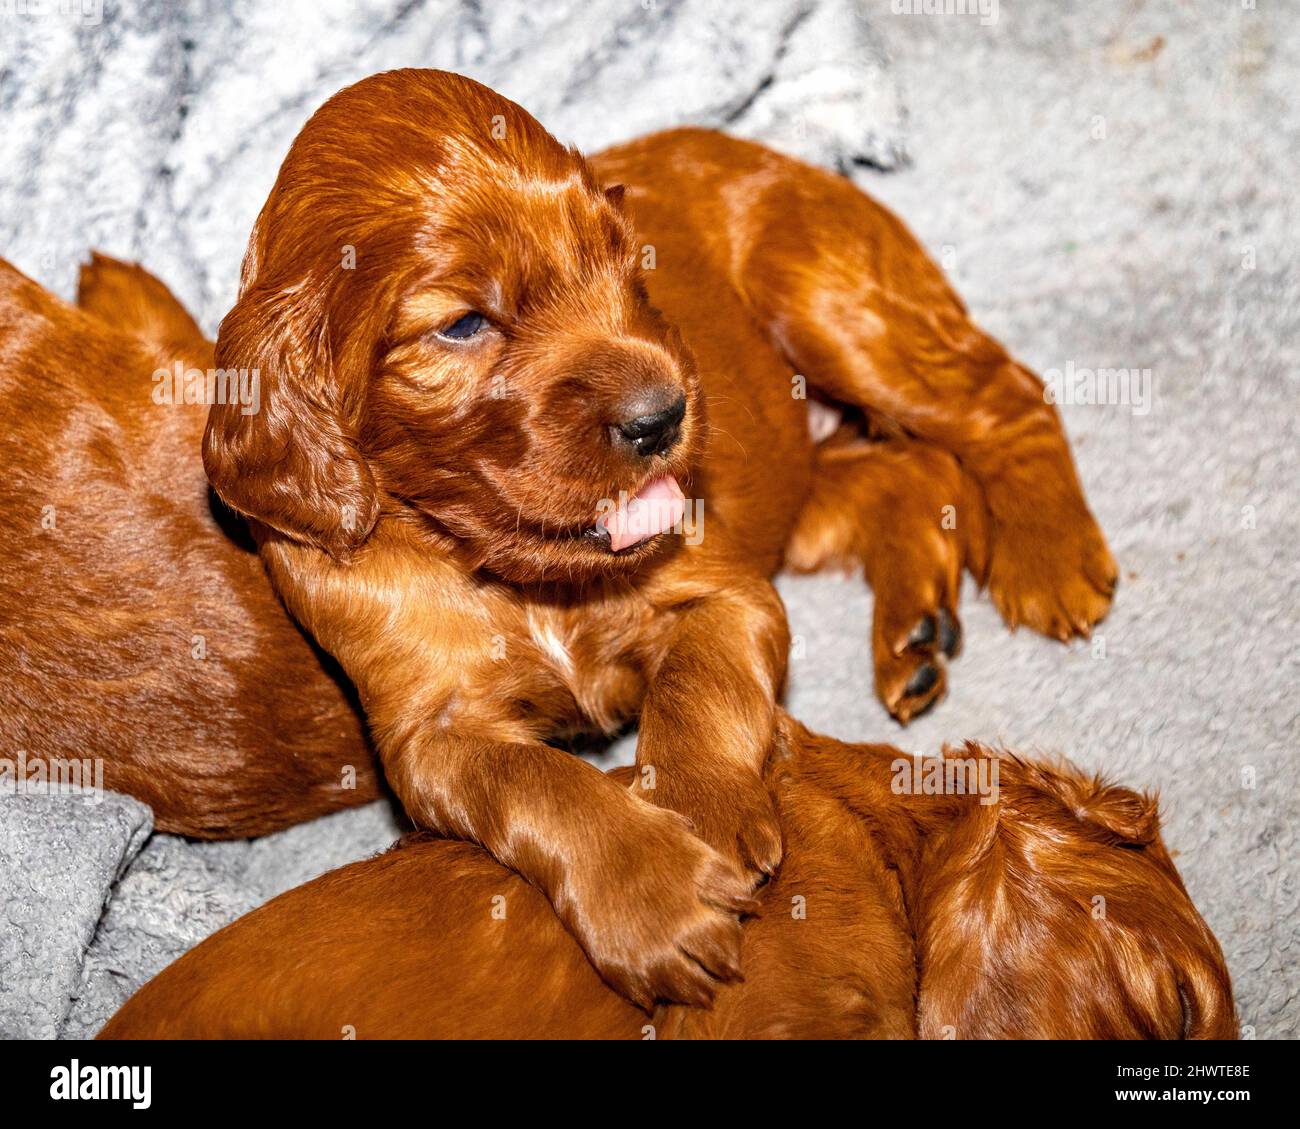 3 week old Irish Setter puppies in whelping box. Stock Photo